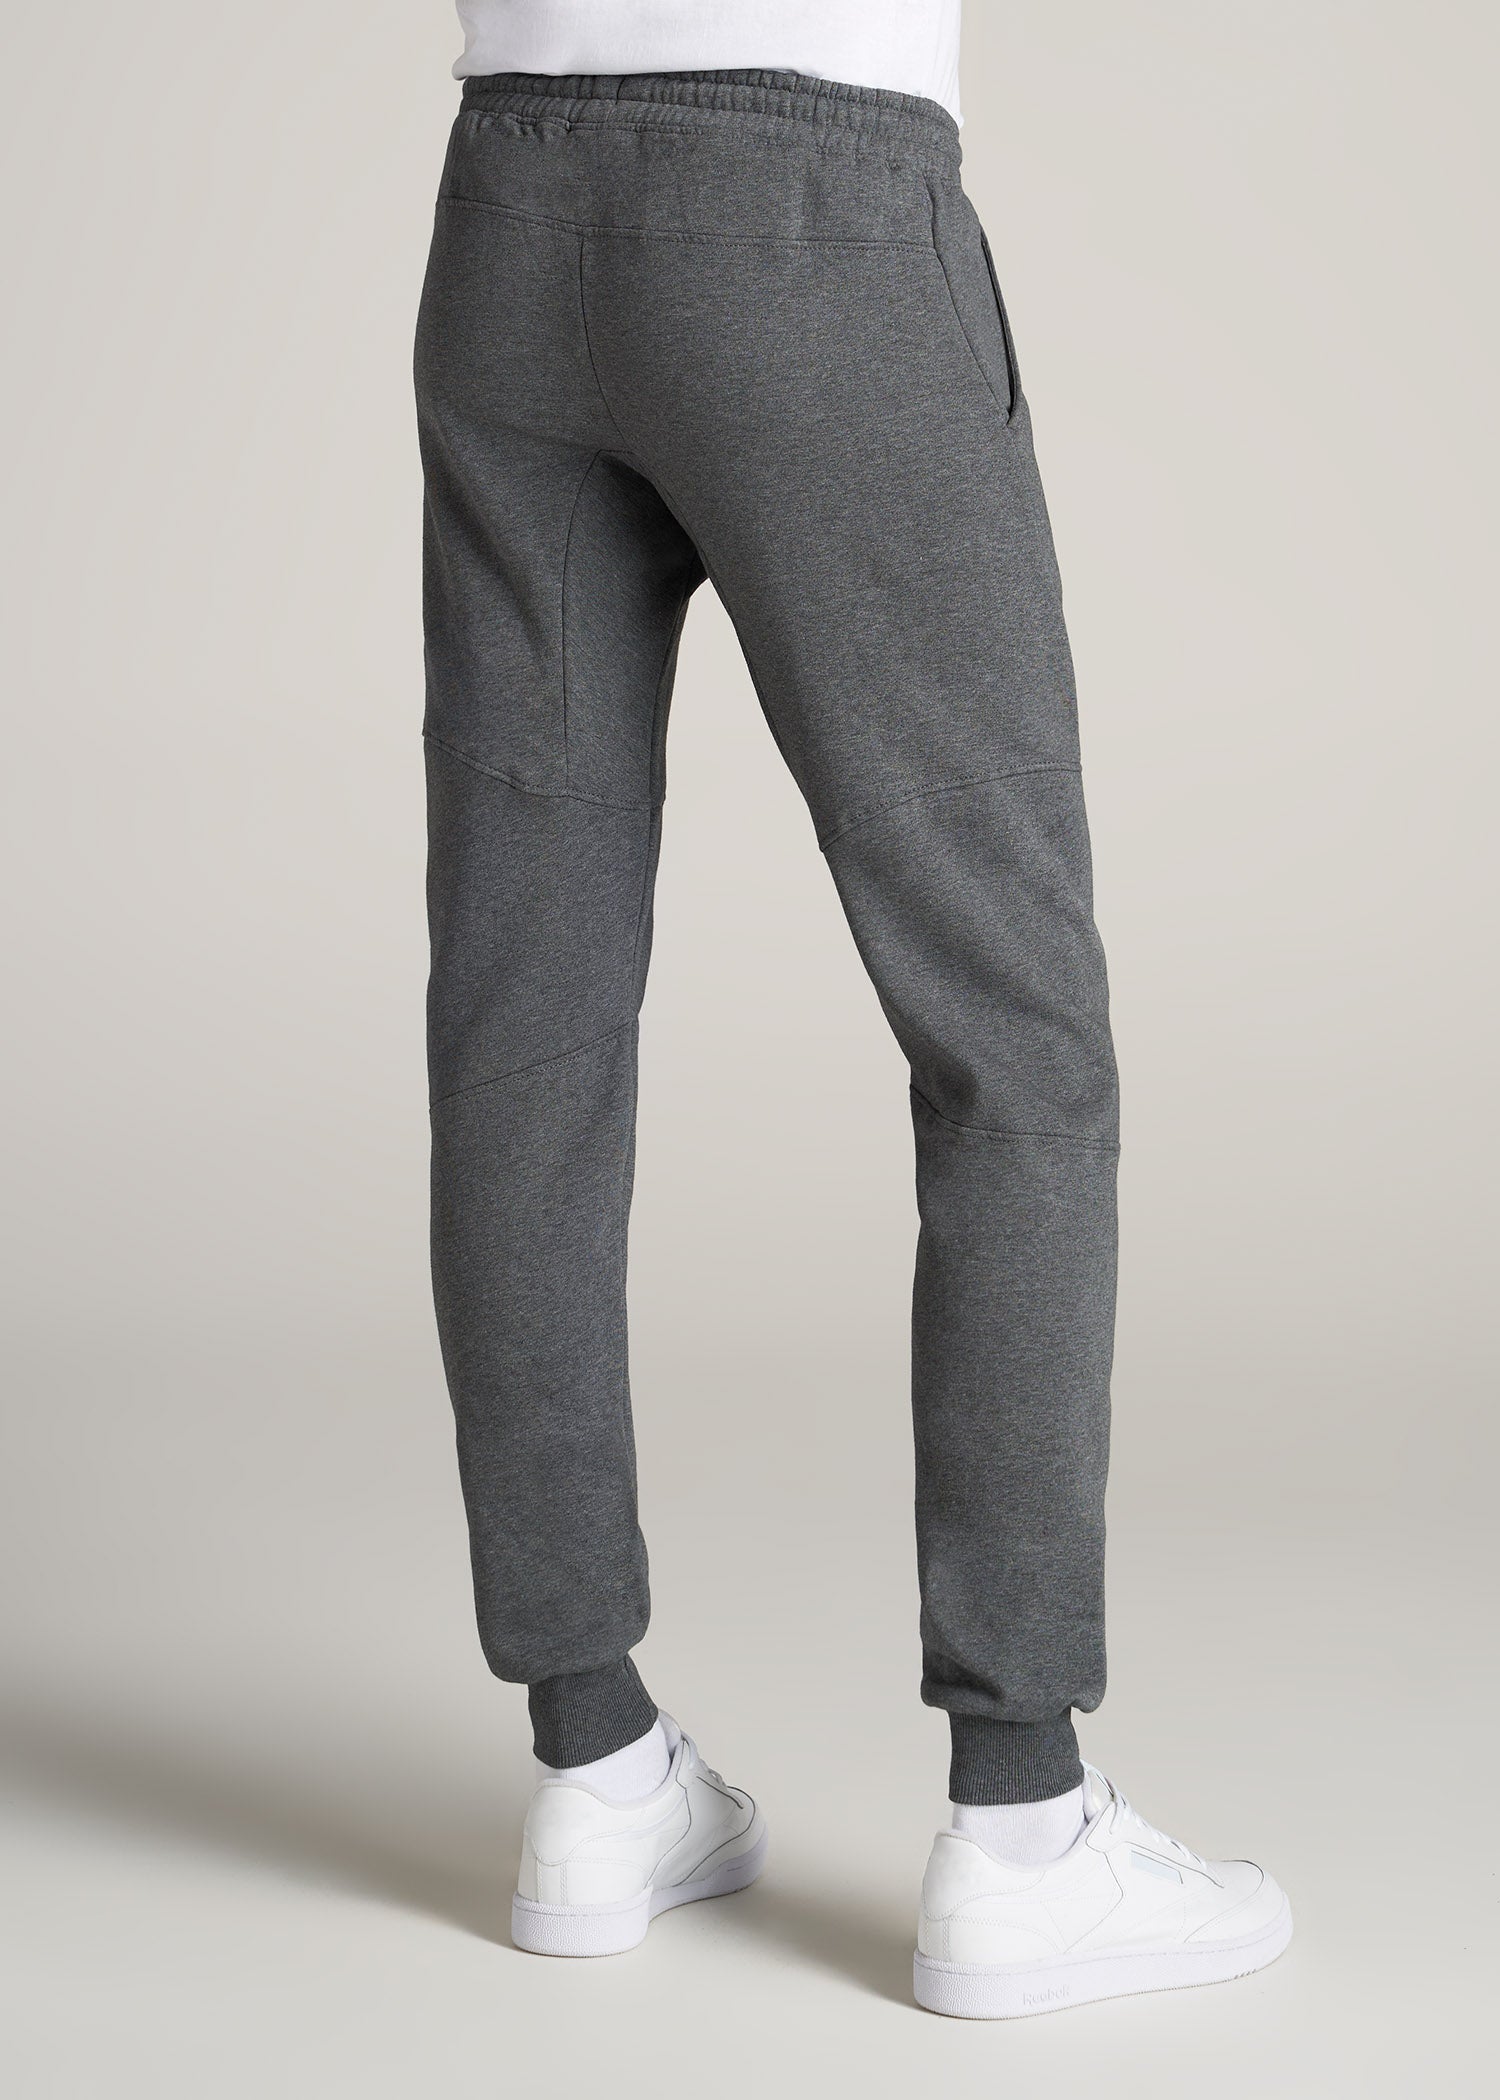 Reebok Women's Cozy Fleece Jogger Sweatpants with Pockets, Grey